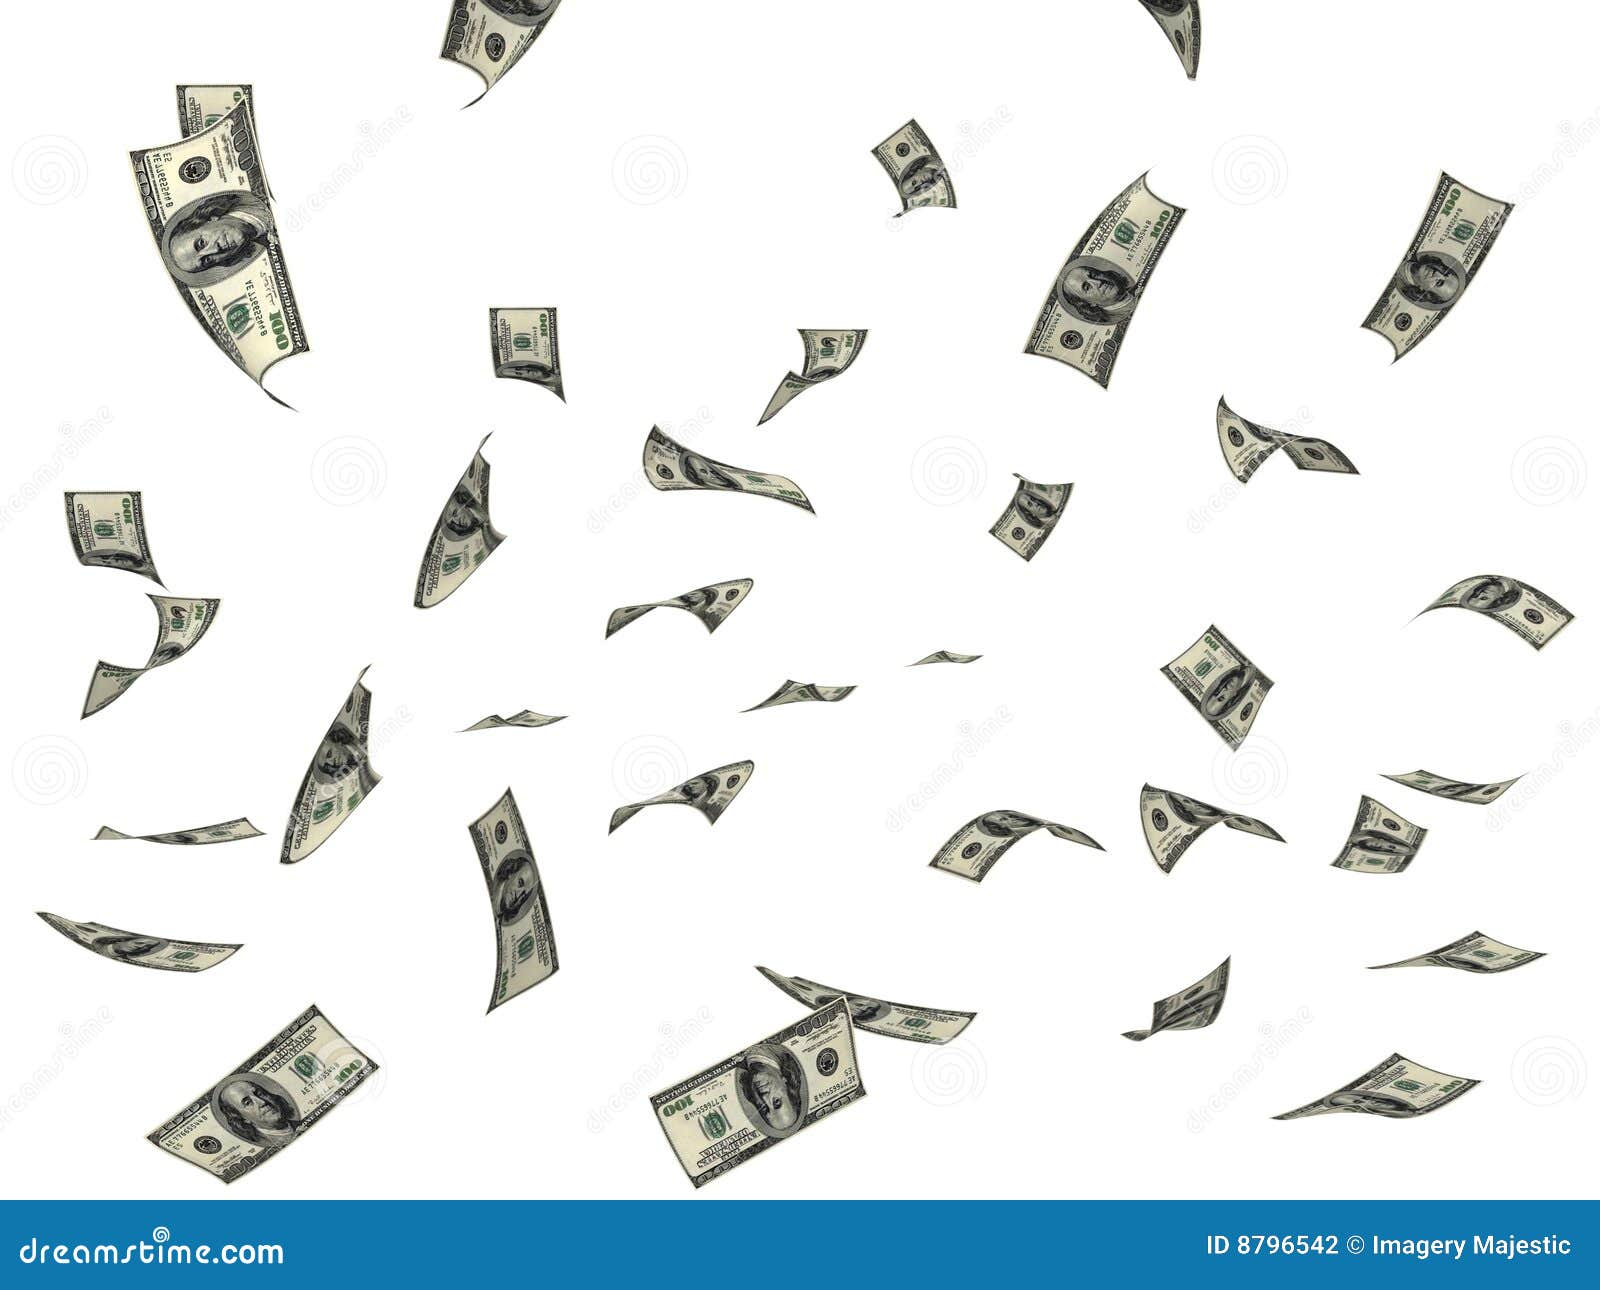 FLYING MONEY stock illustration. Image of commerce, success - 8796542